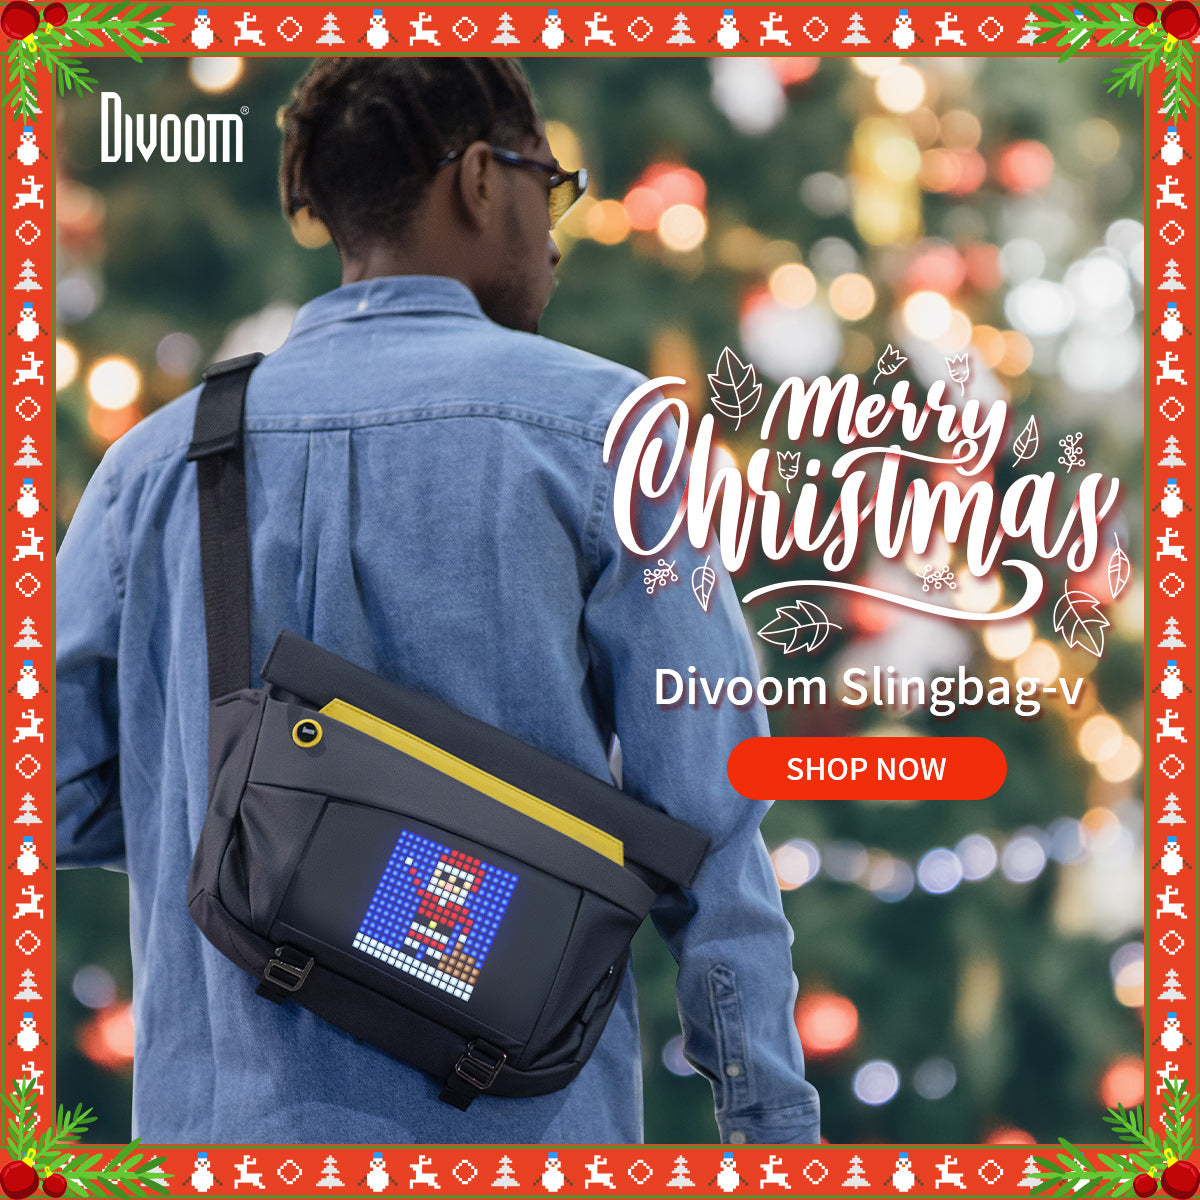 Divoomスリングバッグ-Vカスタマイズ可能なピクセルアートファッションデザインアウトドアスポーツ防水メンズおよびレディースメッセンジャーバッグ新年の贈り物